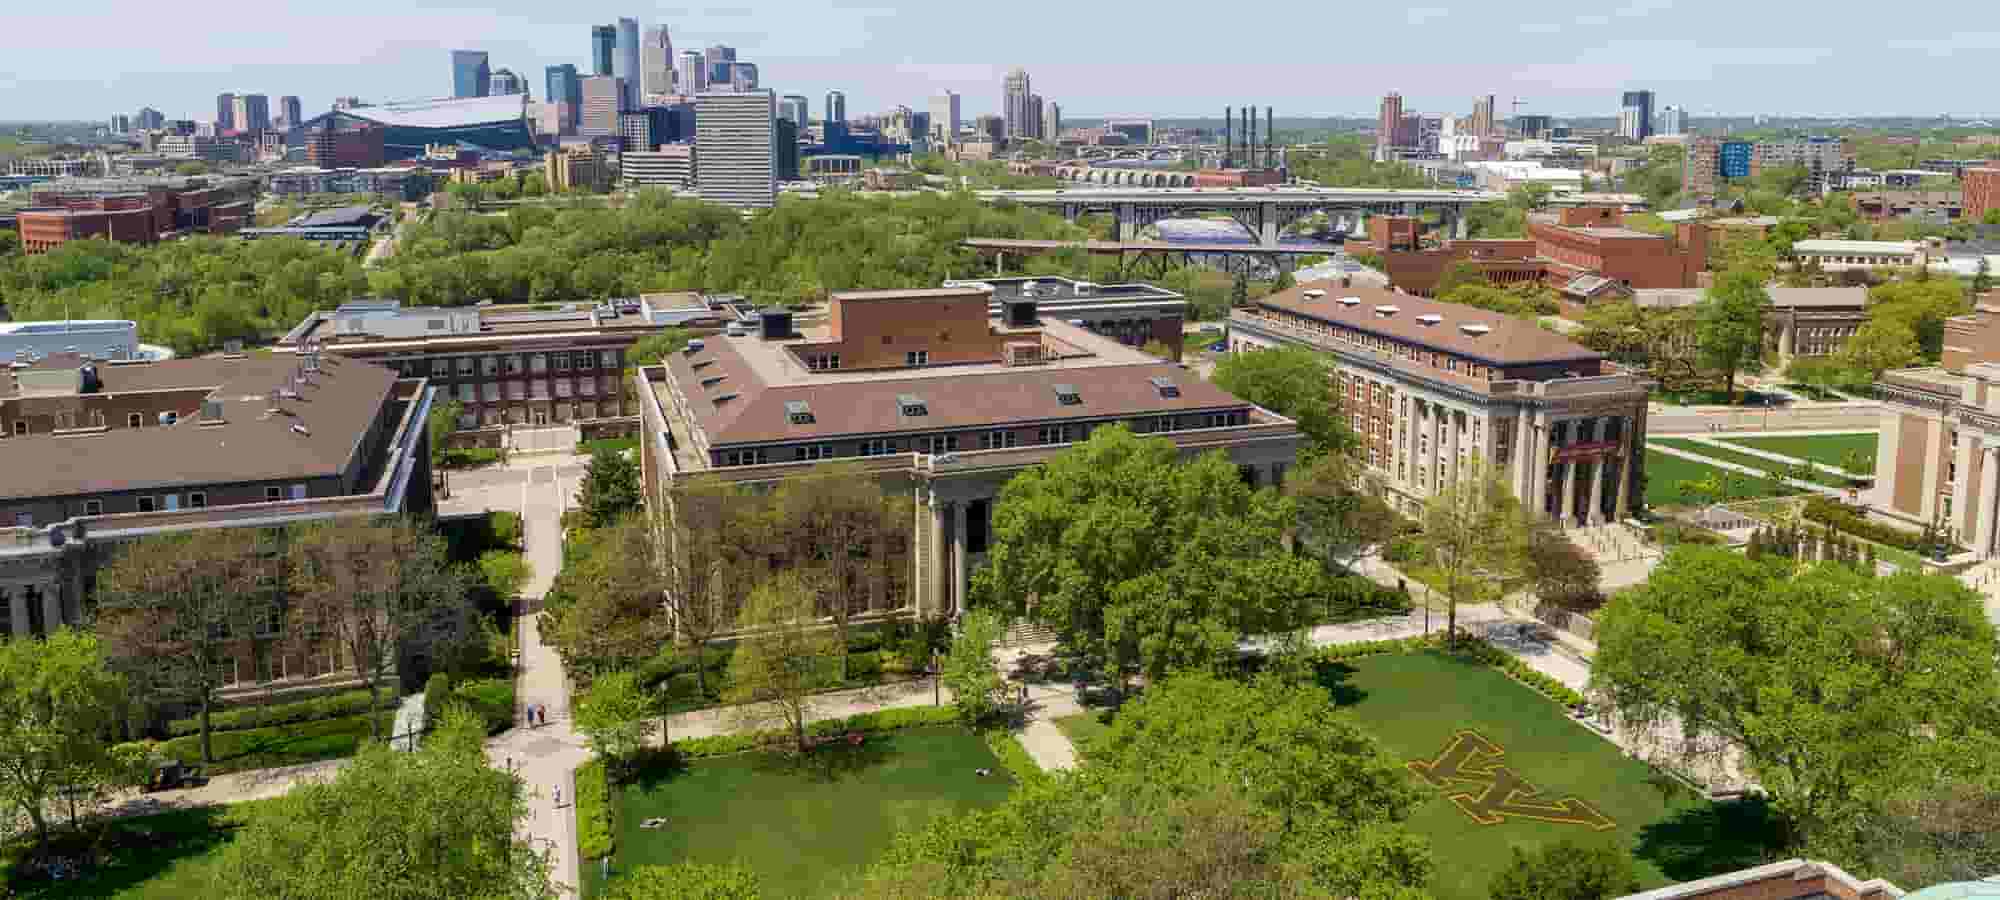 University of Minnesota Twin Cities campus